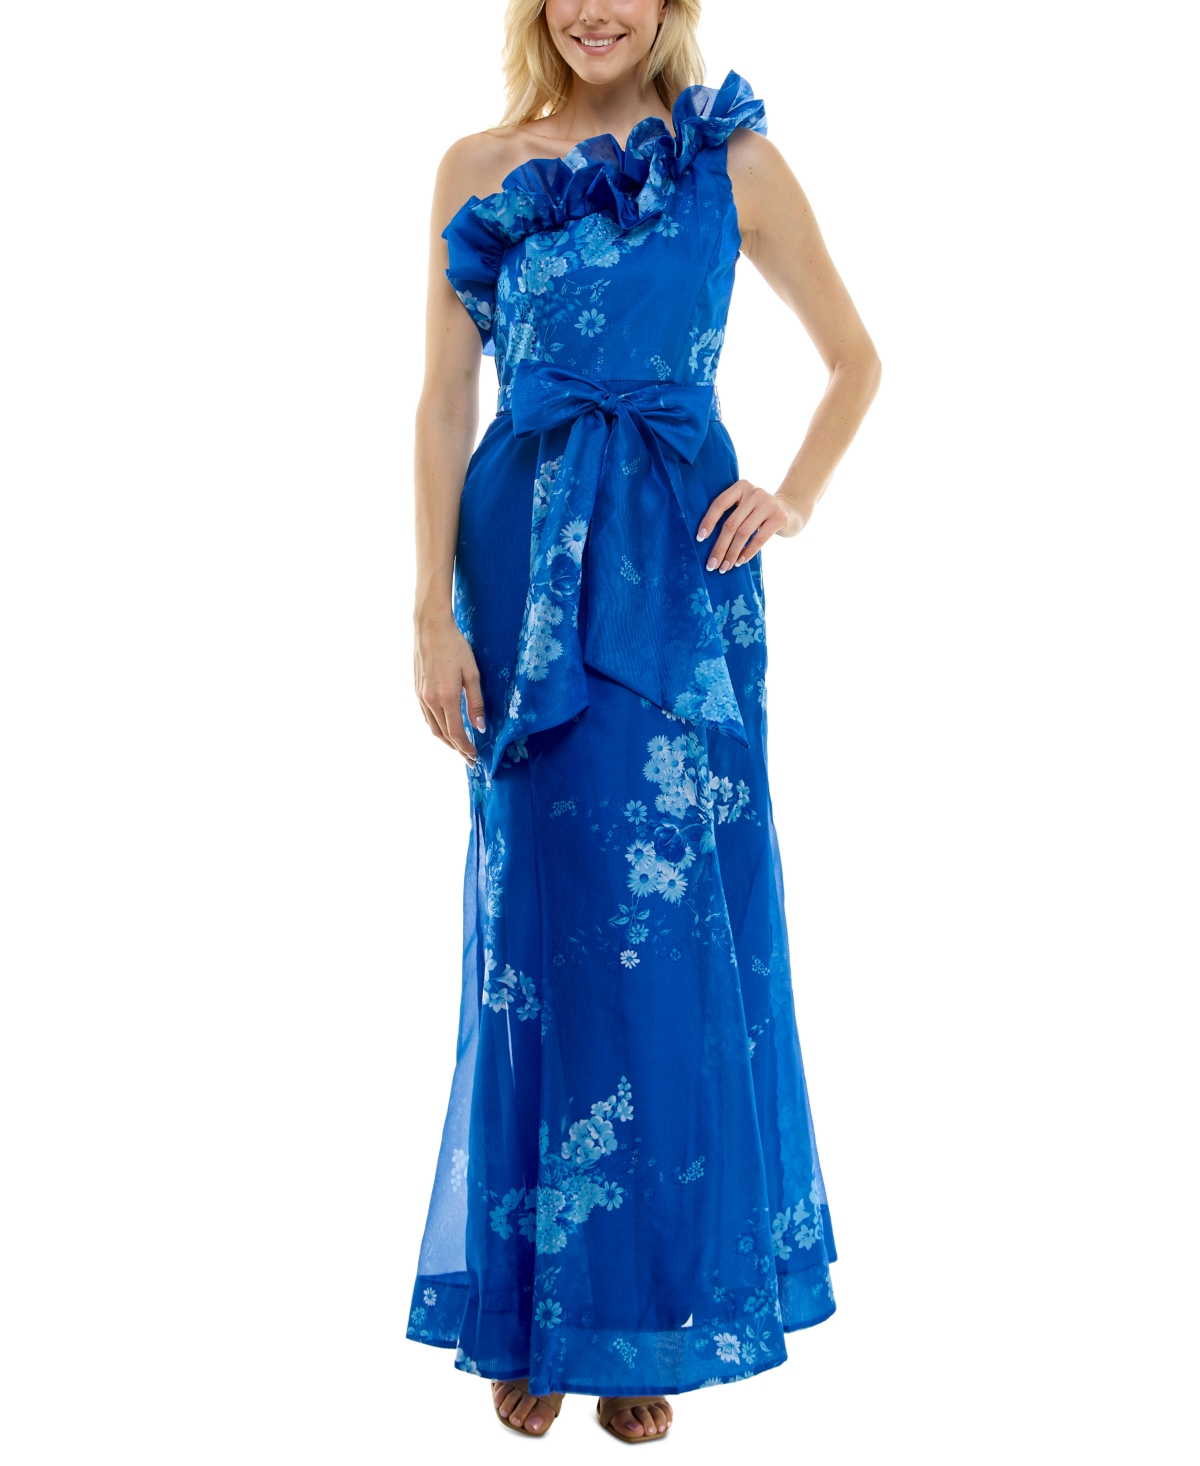 Women's Ruffled One-Shoulder Organza Gown - Sapphire/Blue